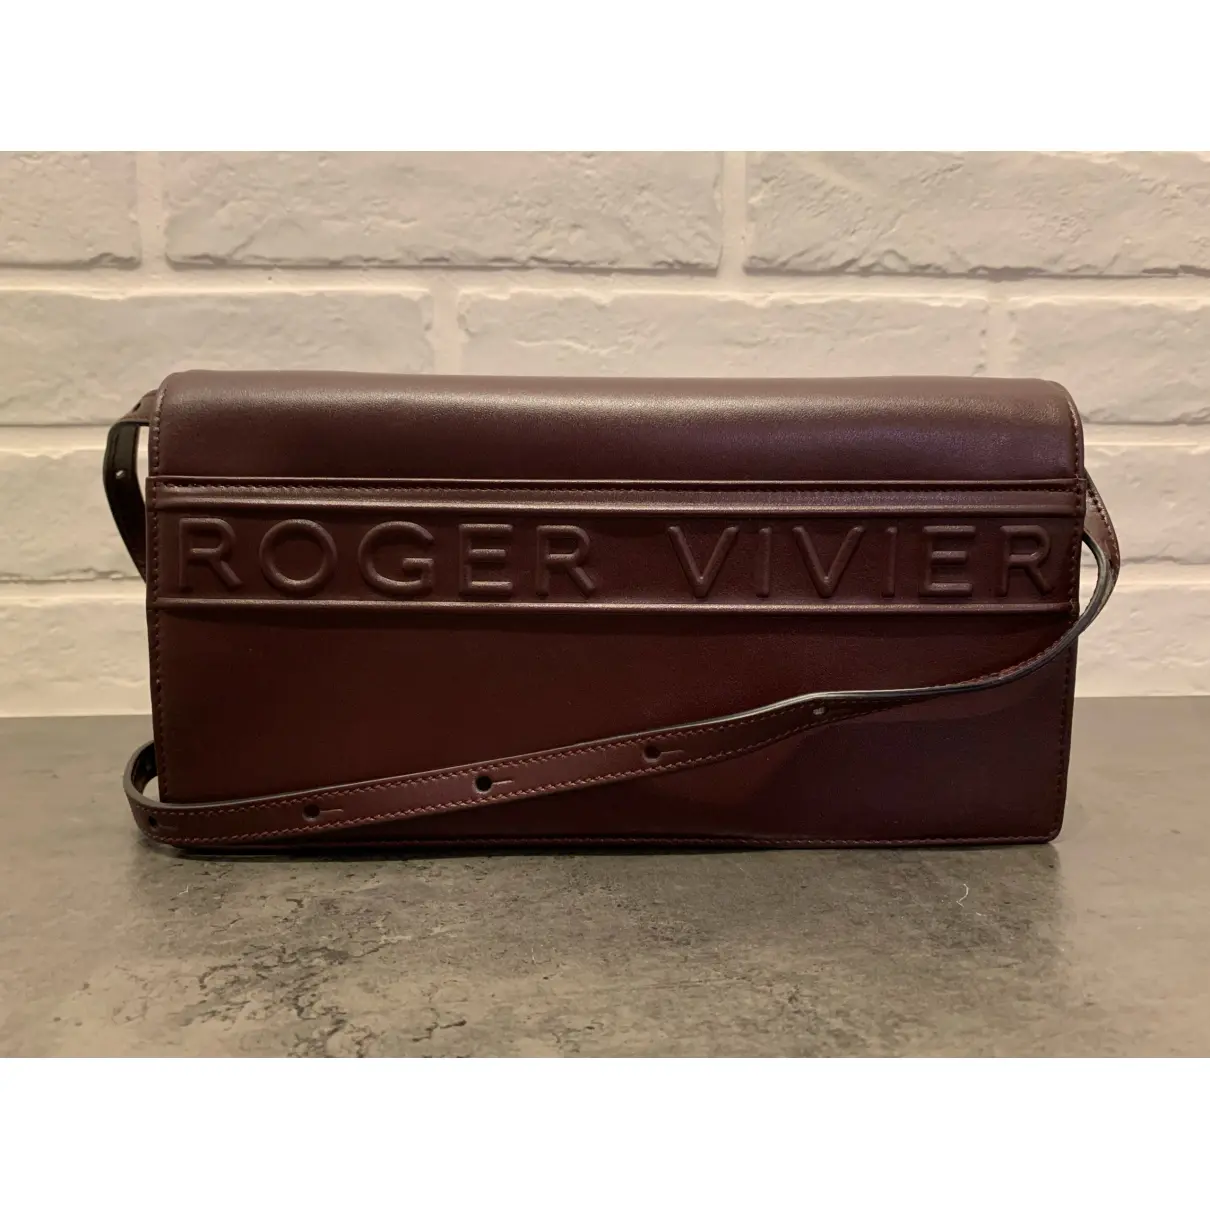 Luxury Roger Vivier Handbags Women